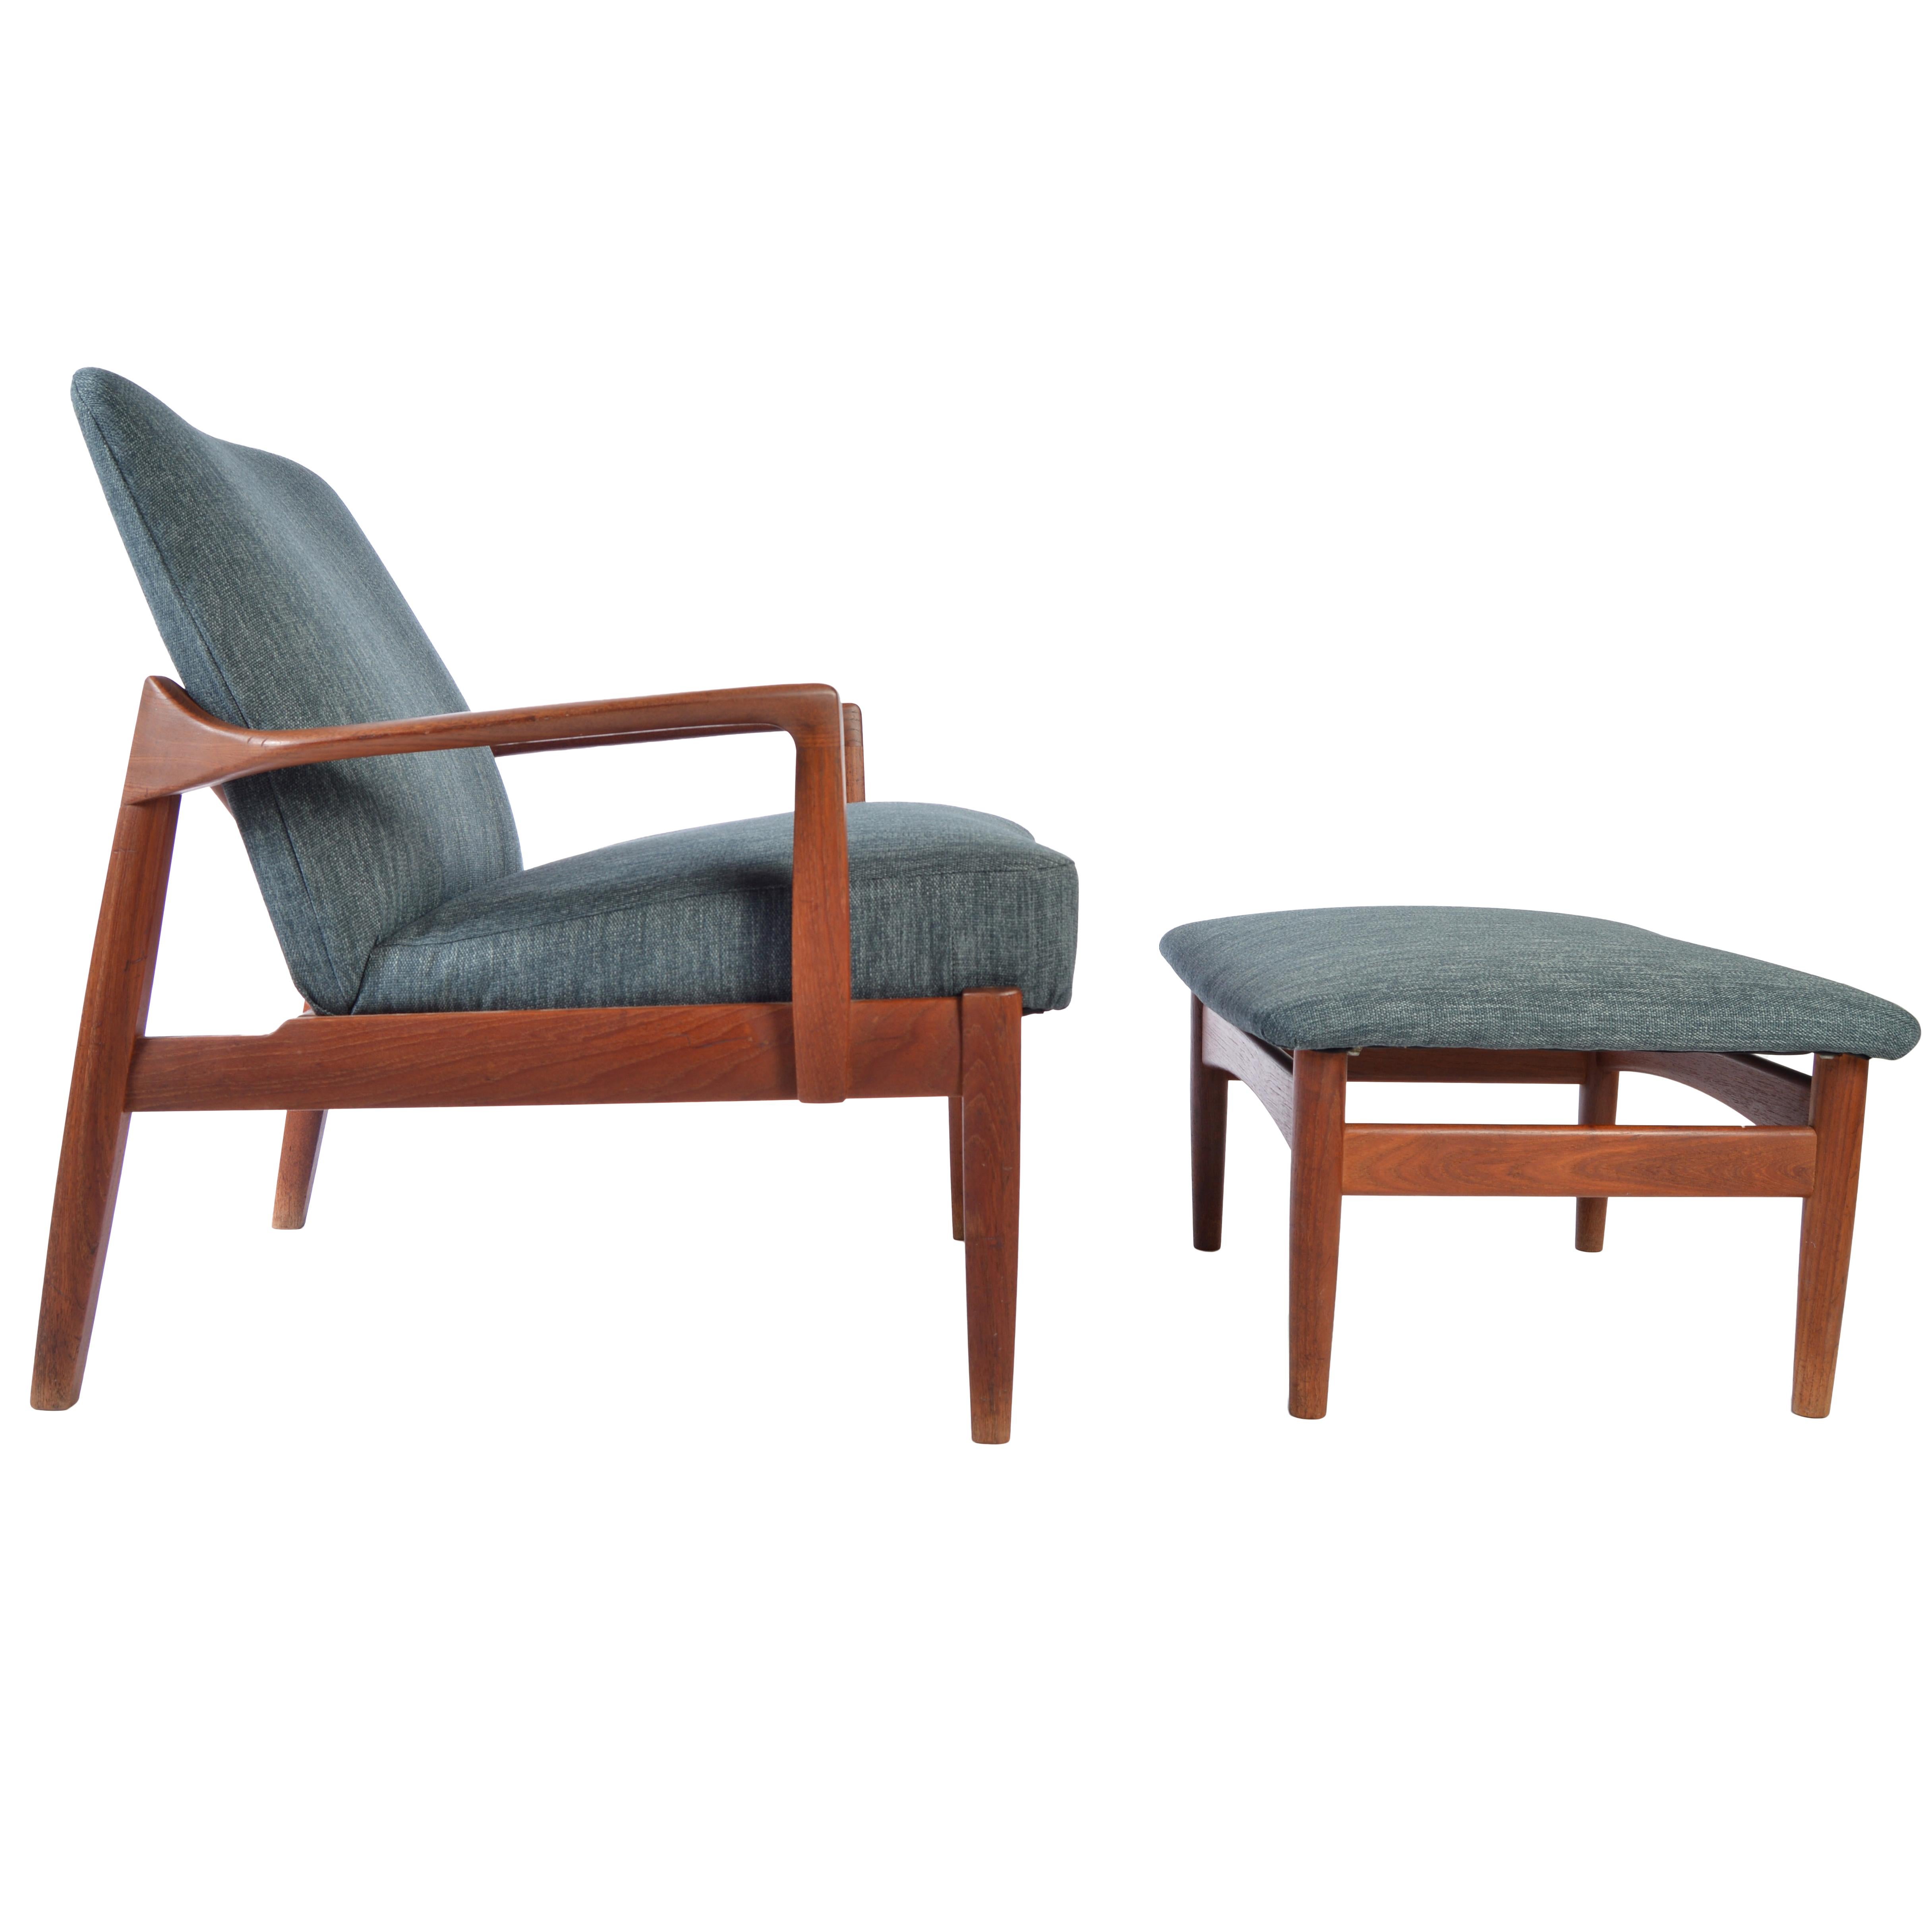 Tove & Edvard Kindt-Larsen Teak Easy Chair with Matching Ottoman